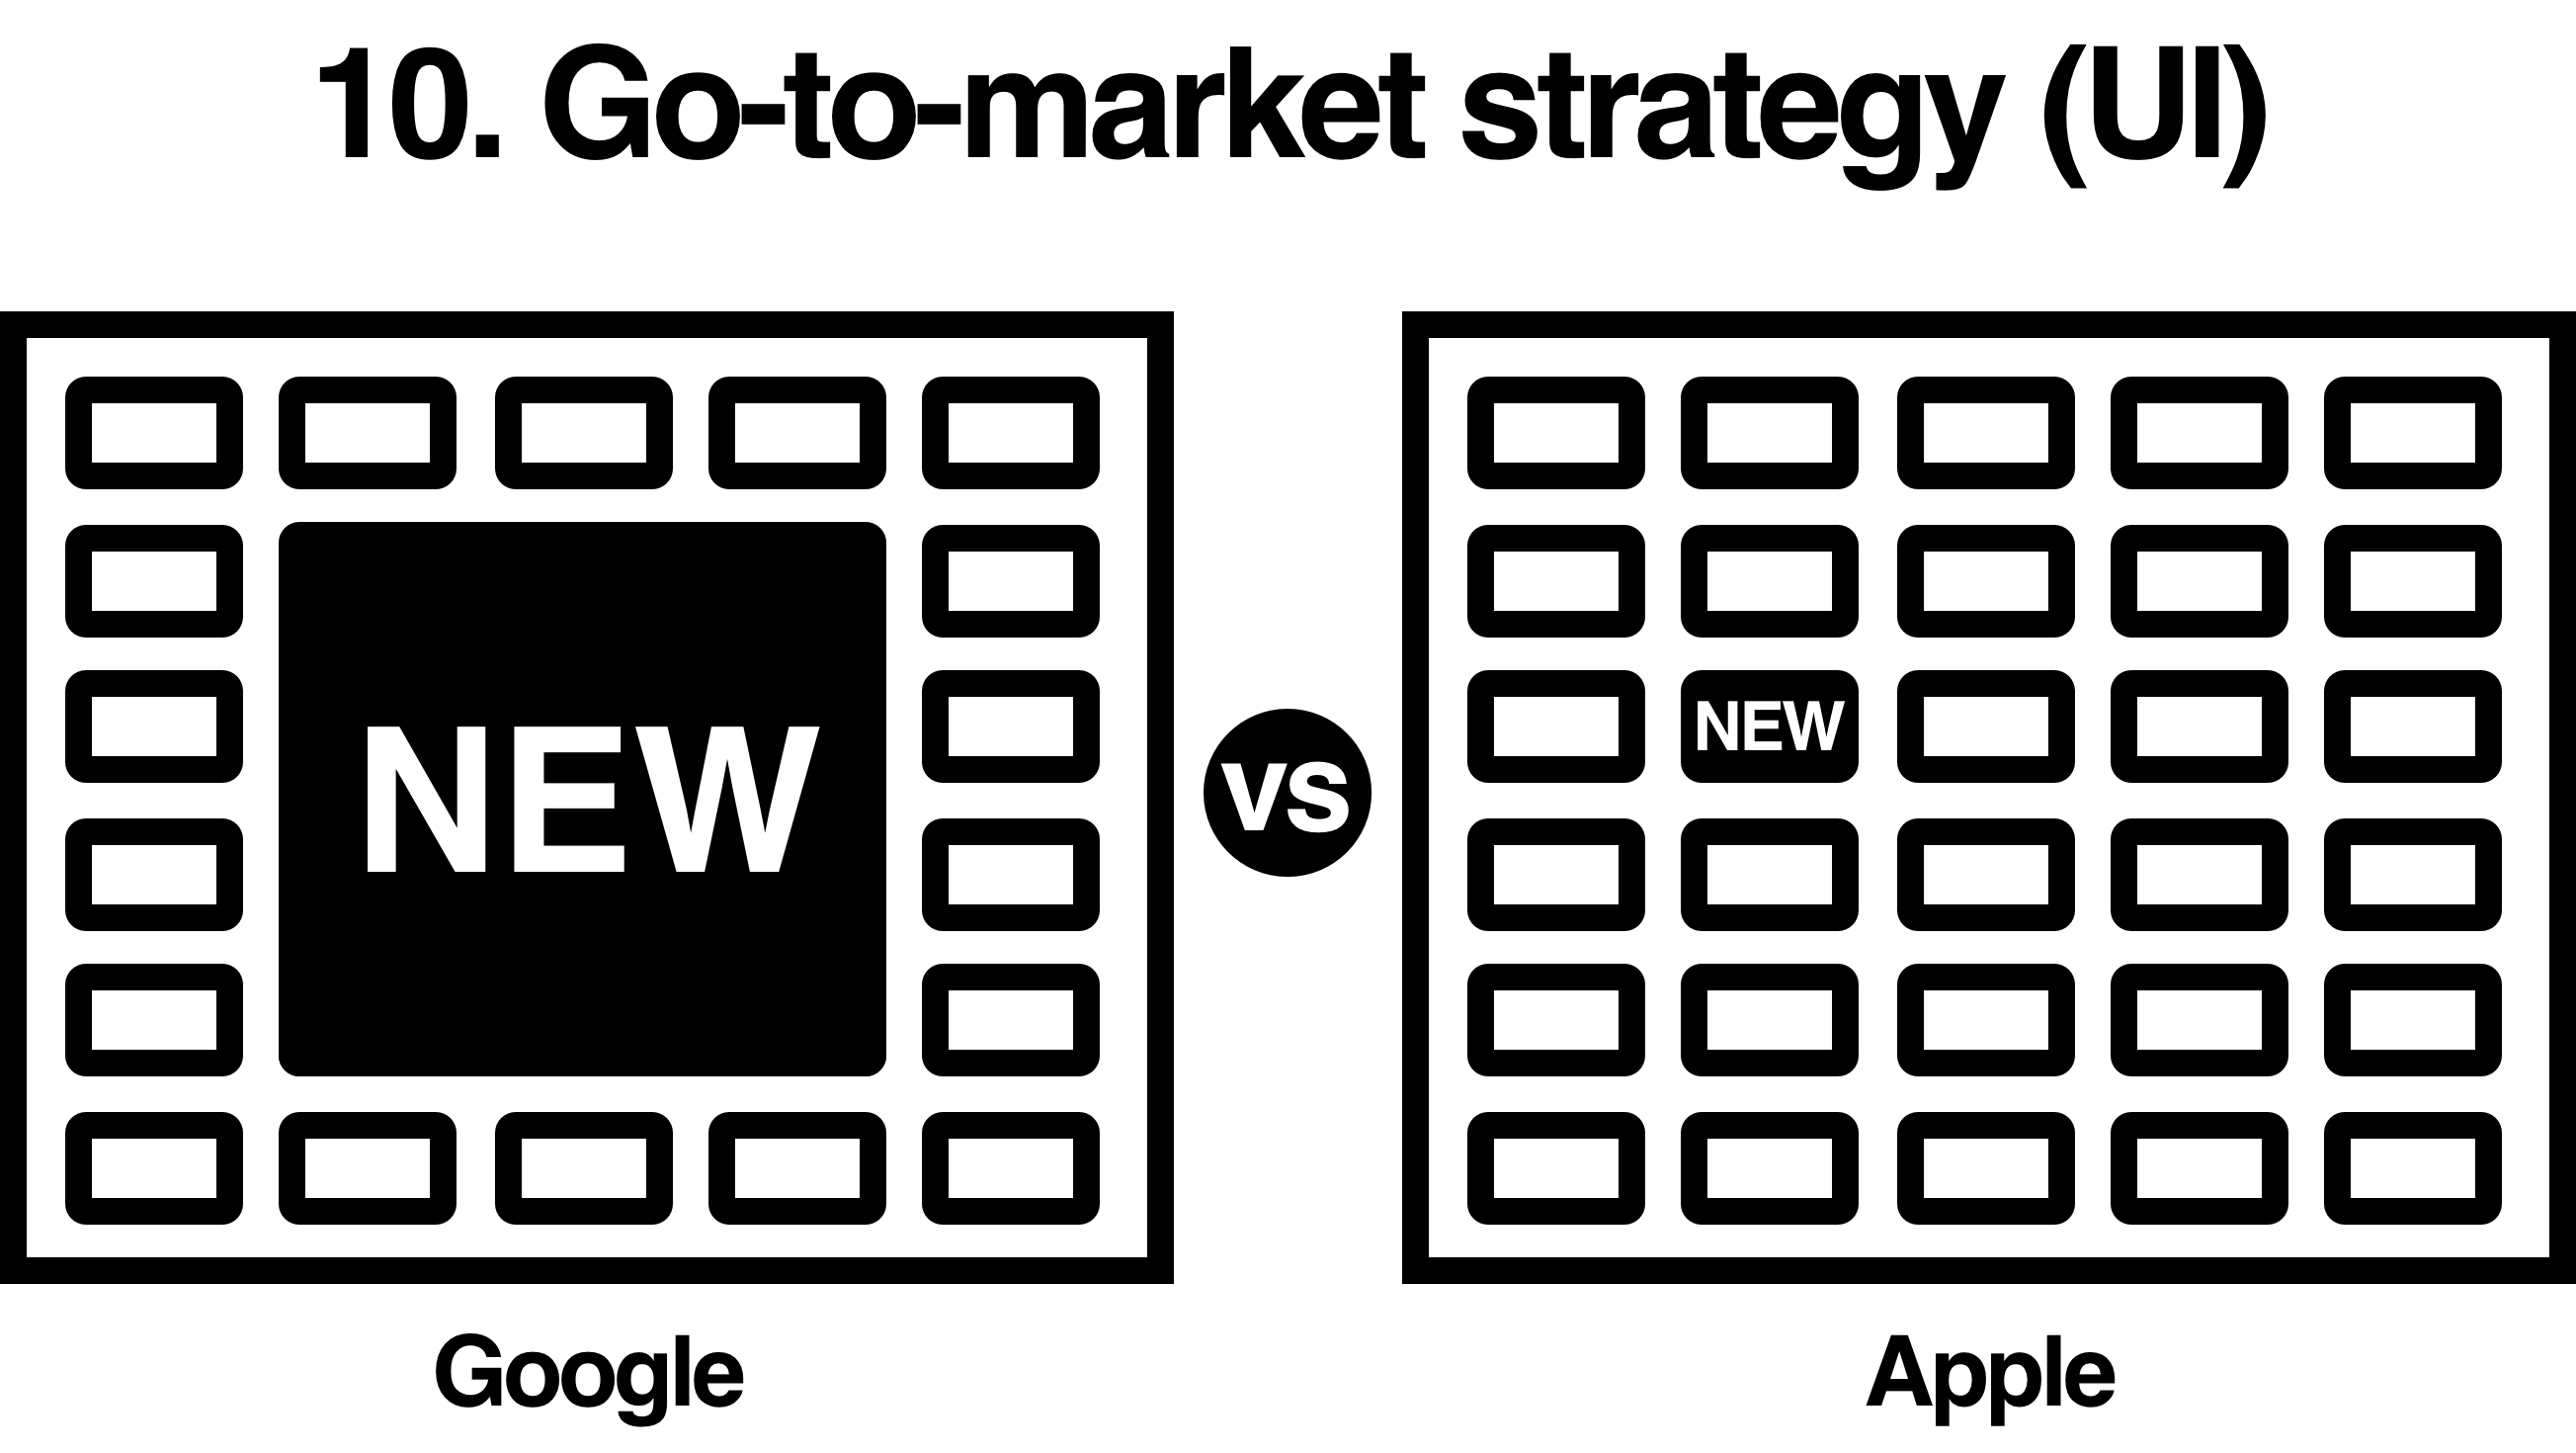 Google vs Apple: UI design and go-to-market strategy comparison